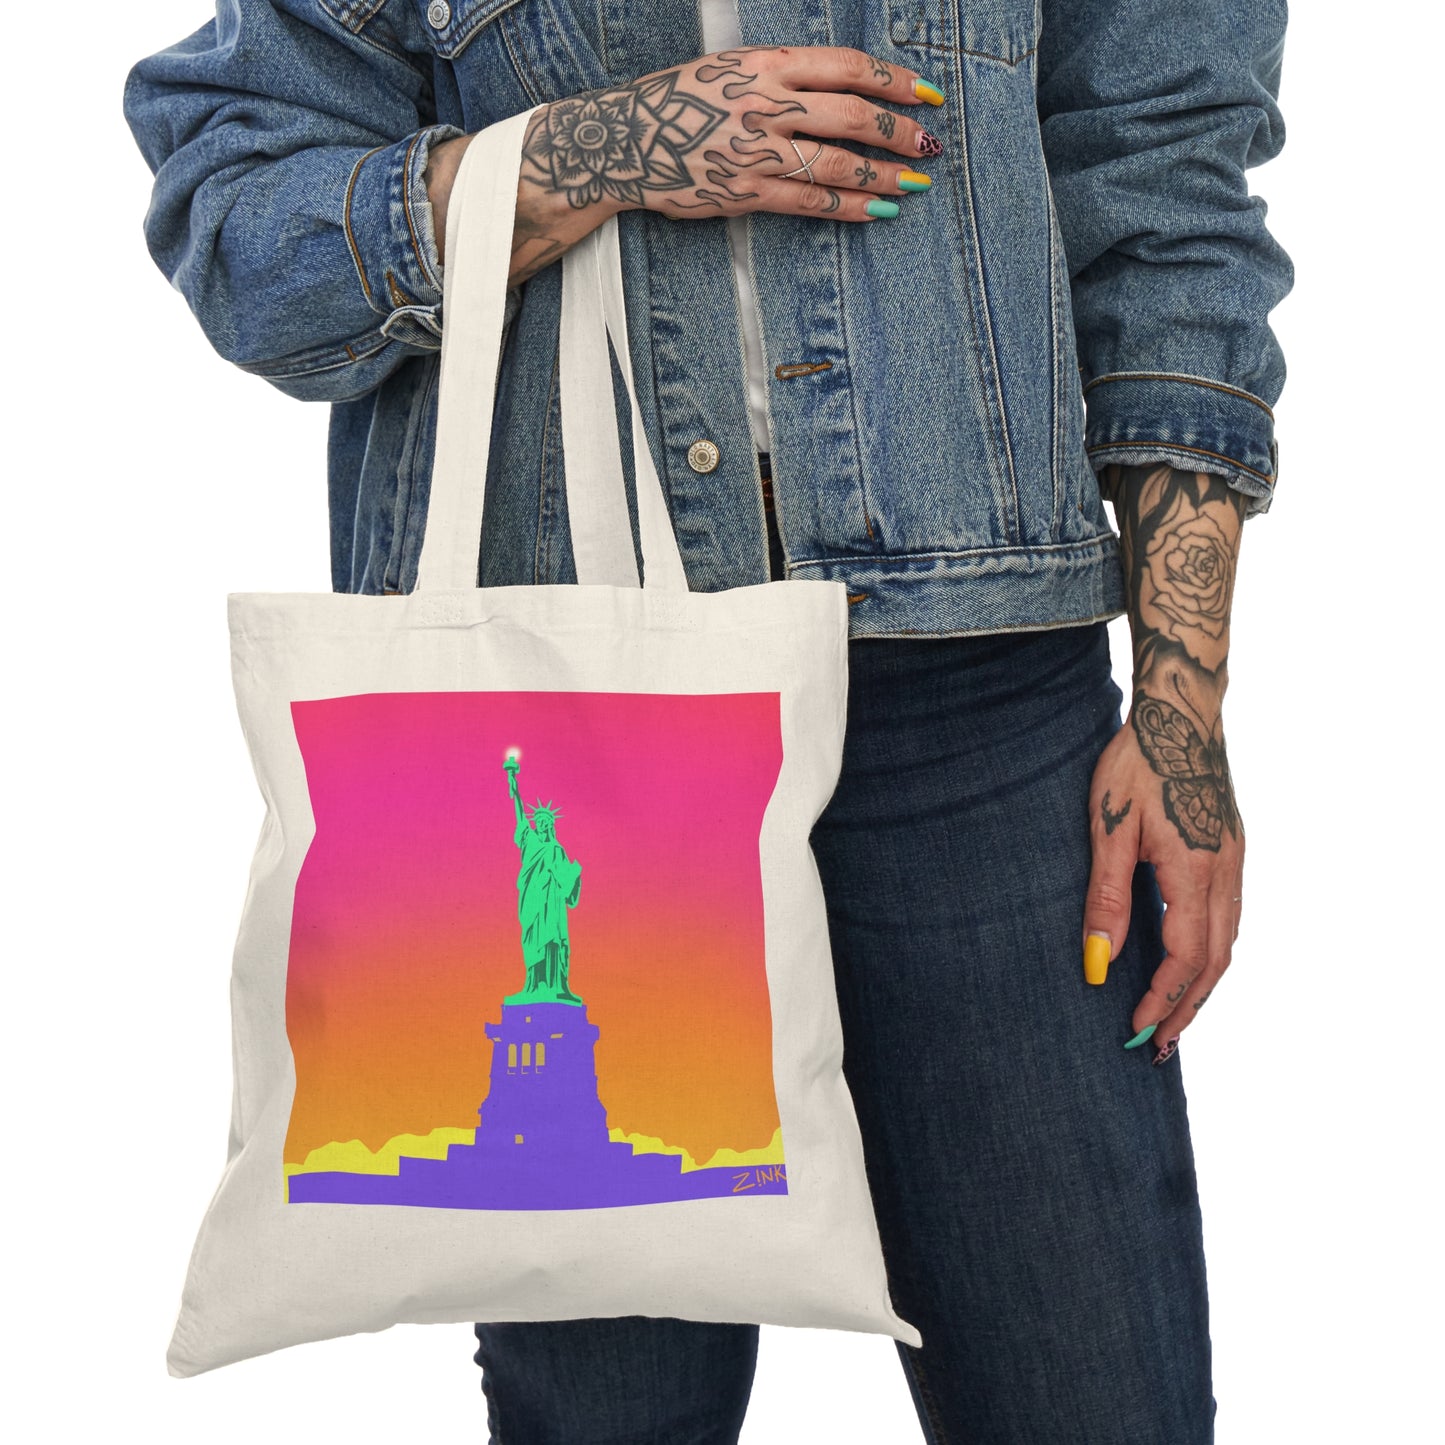 Statue of Liberty Pop Art, Natural Tote Bag